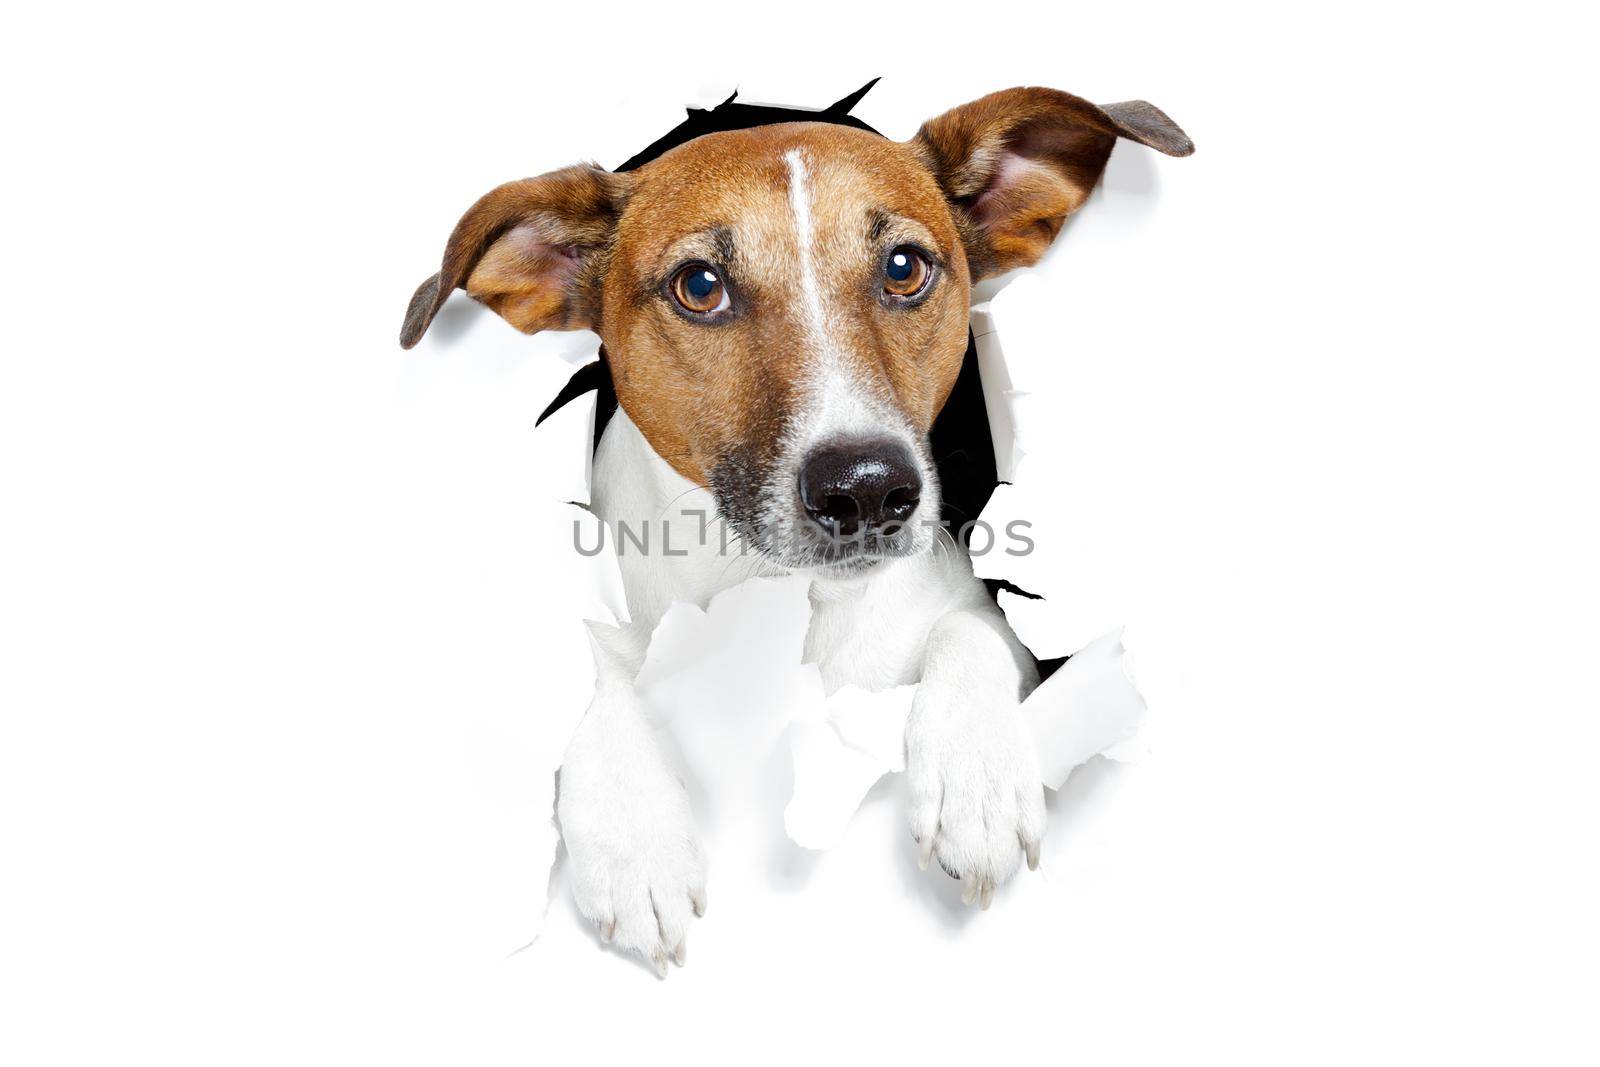 banner placeholder dog  by Brosch